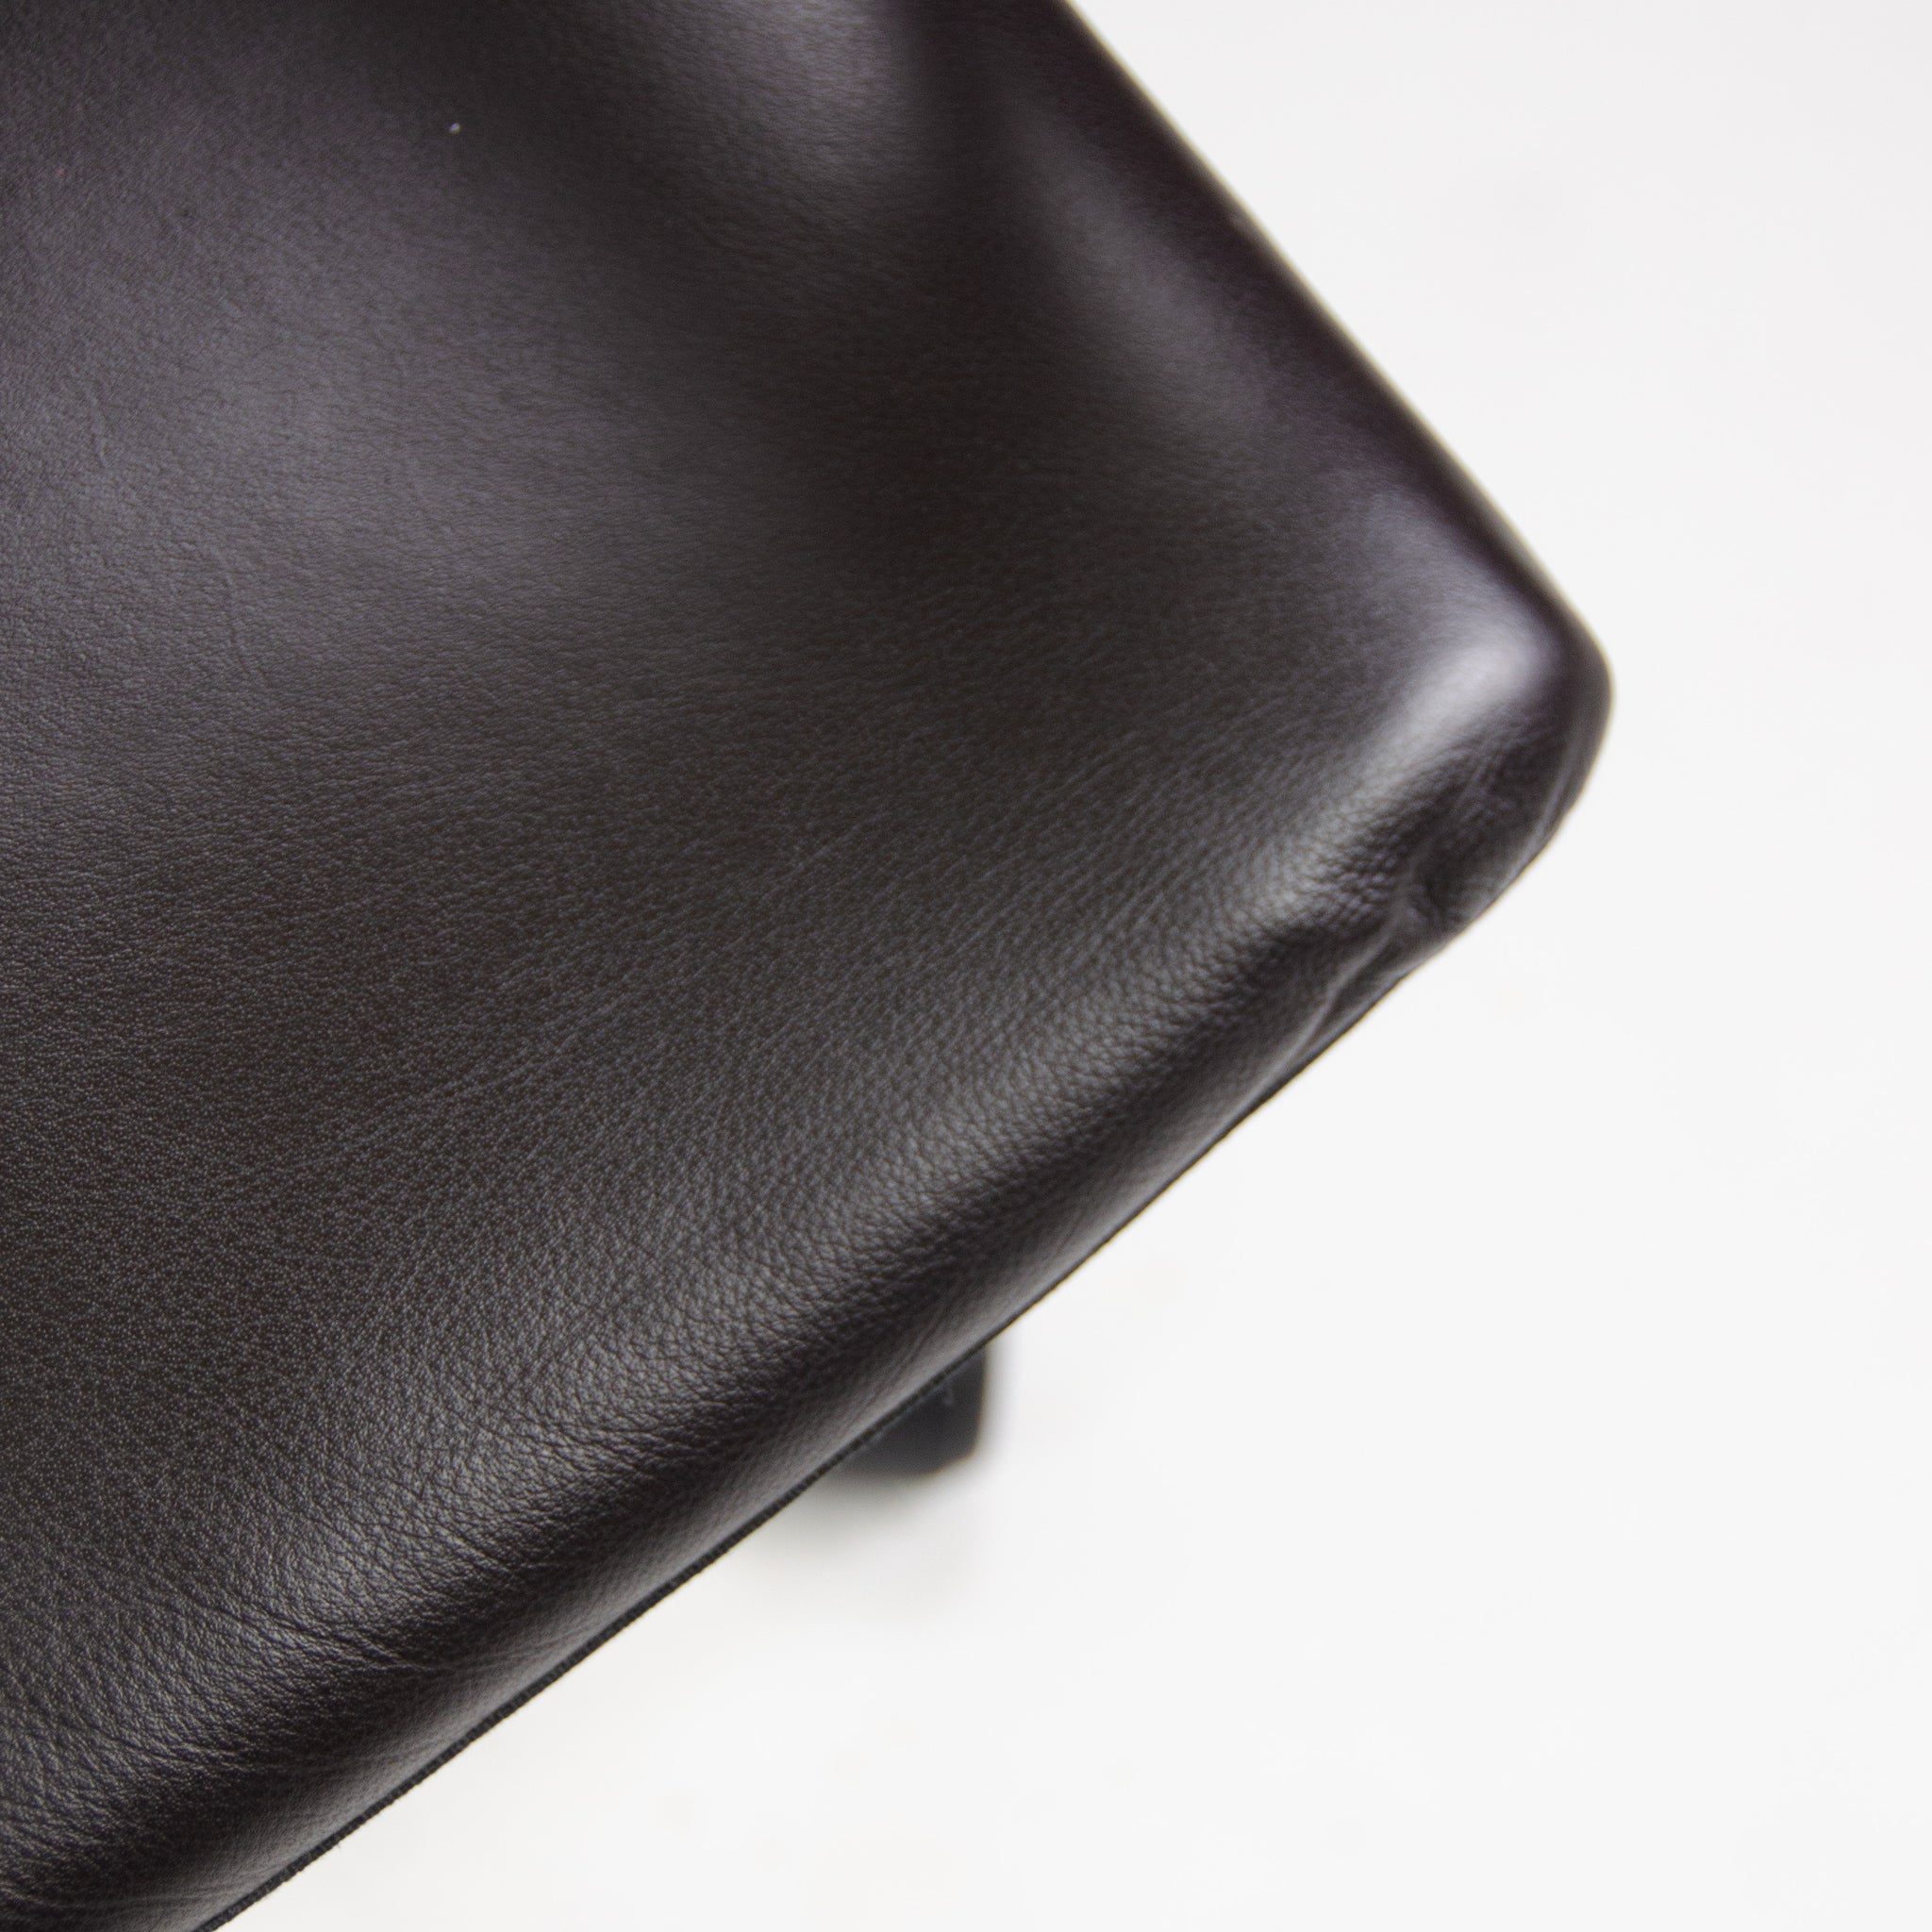 SOLD Meda by Vitra Alberto Meda Desk Chair Brown Full Leather